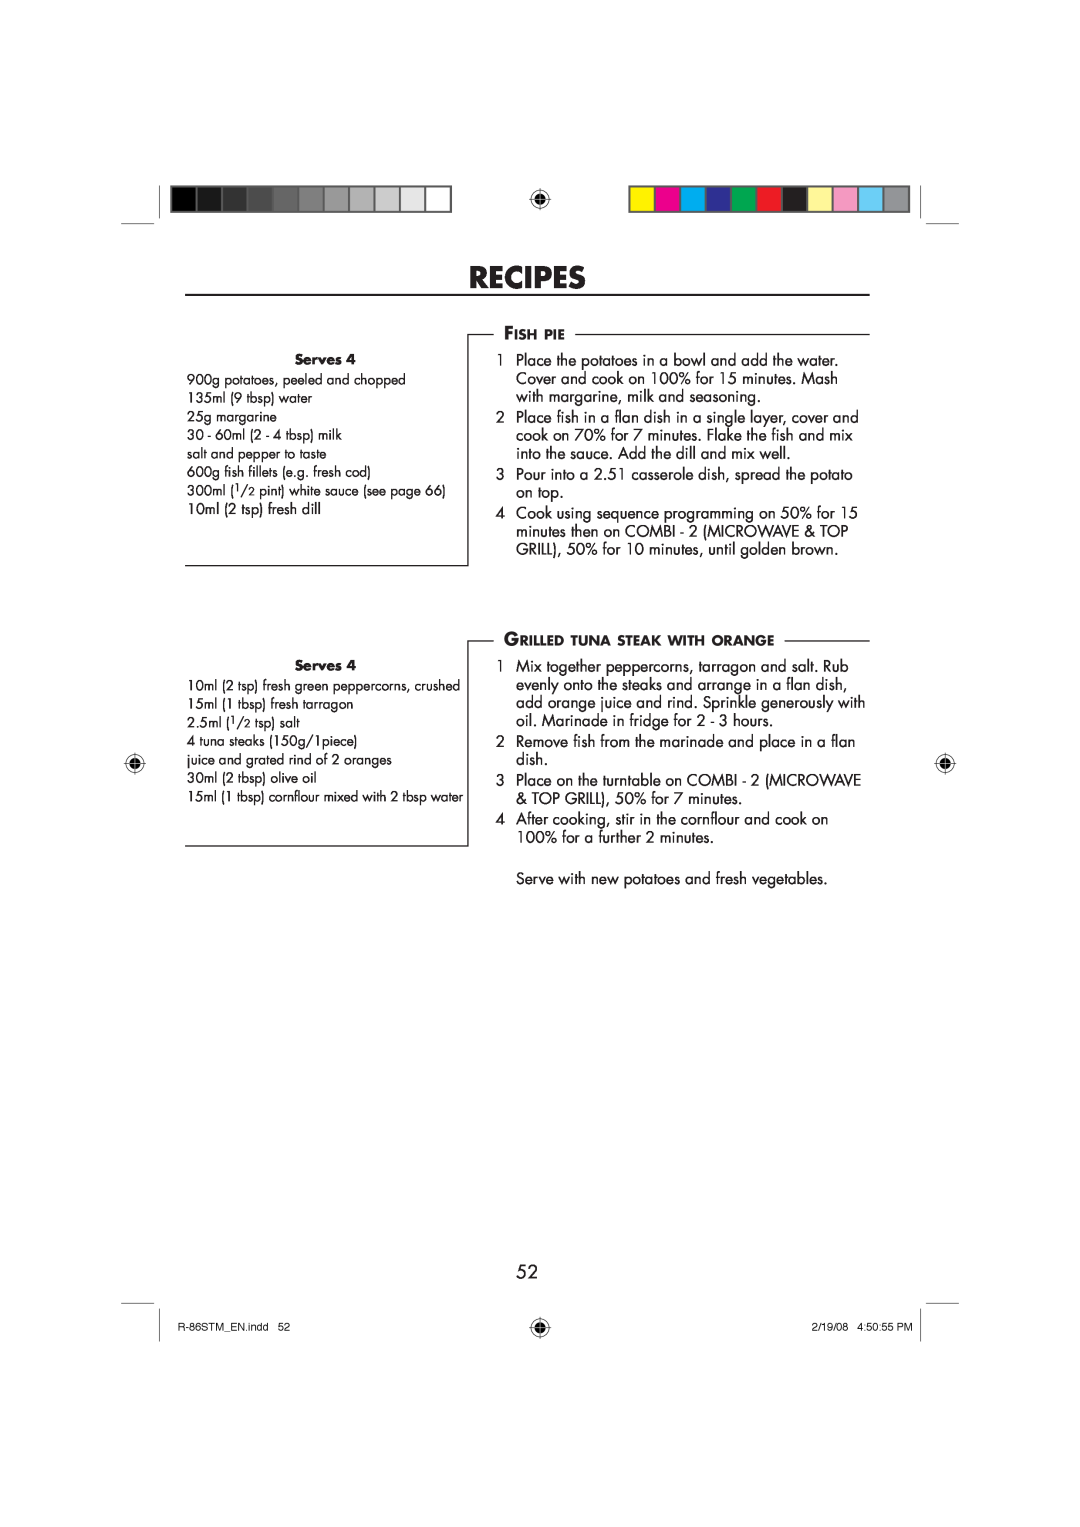 Sharp R-86STM manual Recipes, 10ml 2 tsp fresh dill 